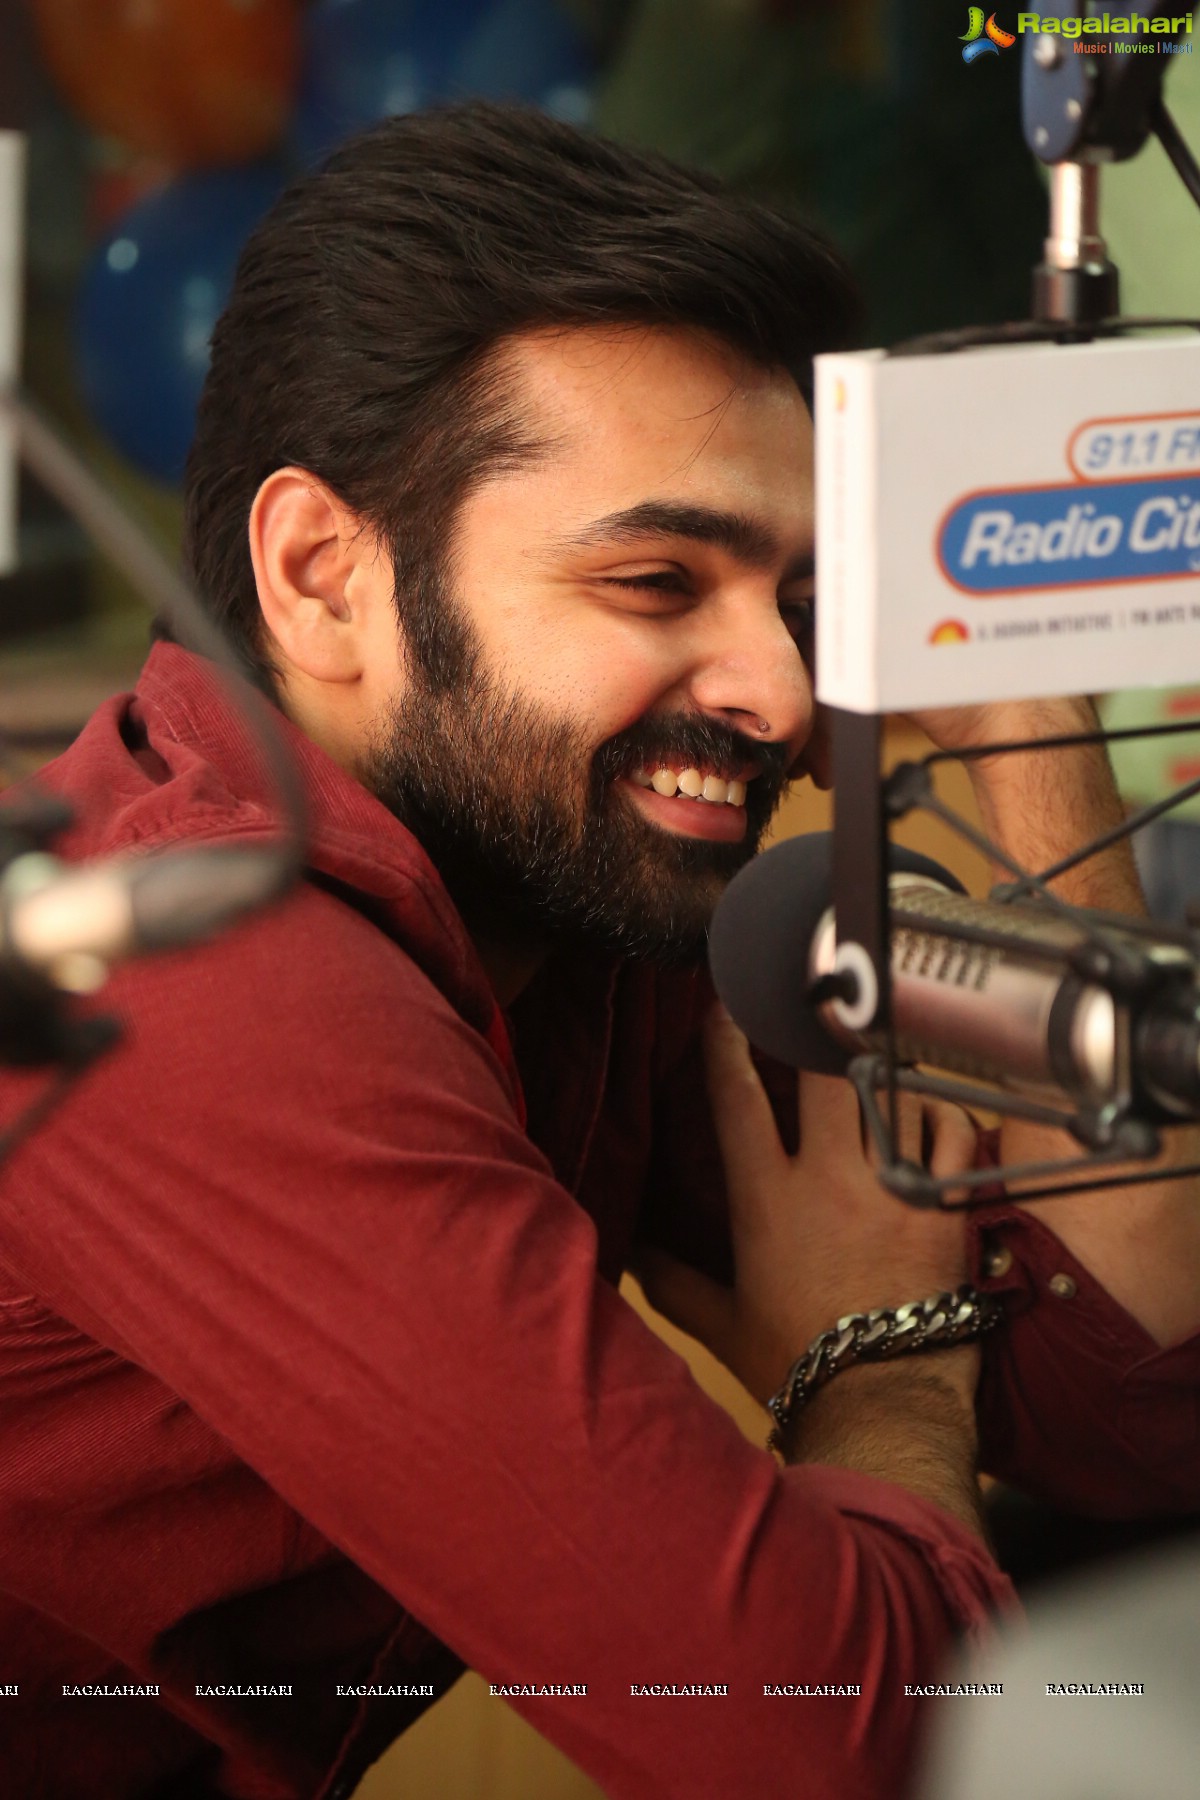 Ram Pothineni at 91.1 FM Radio City, Hyderabad